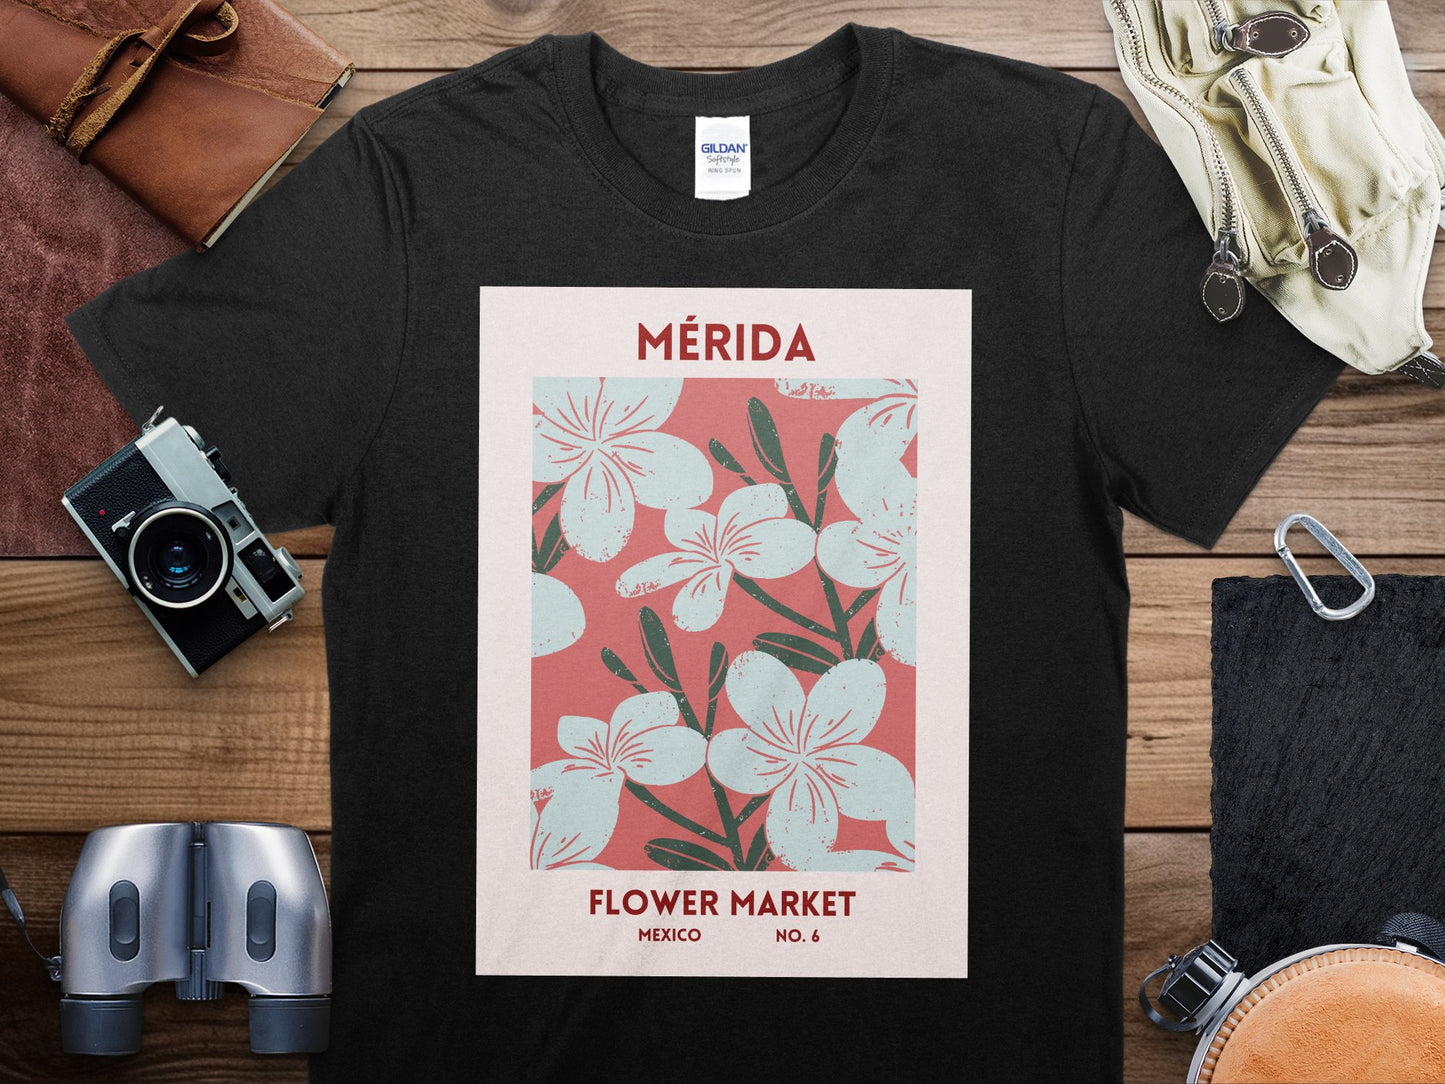 Merida Flower Market Mexico T-Shirt, Merida Flower Market Travel Shirt